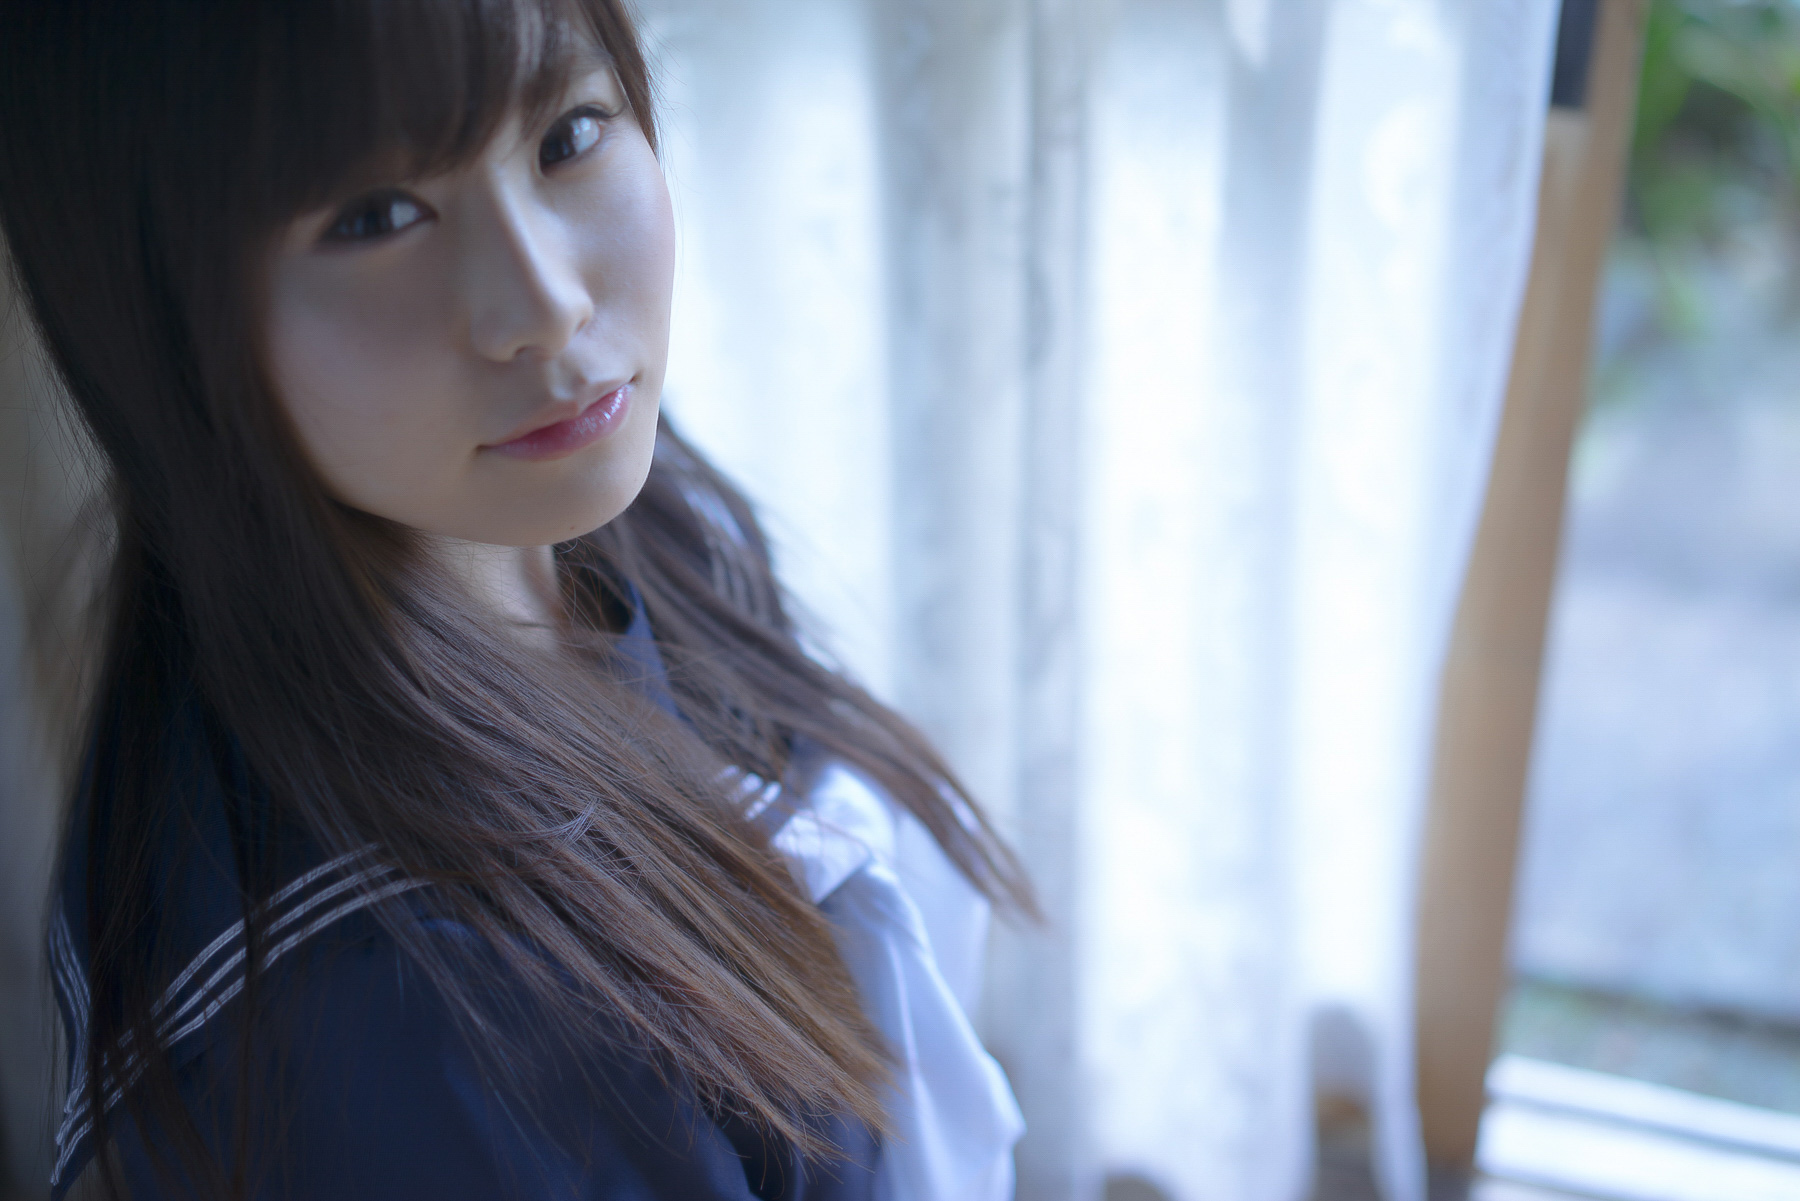 [LOVEPOP] Megumi Aisaka 逢坂愛 Photoset 01 写真集(34) -美女写真美女图片大全-高清美女图库